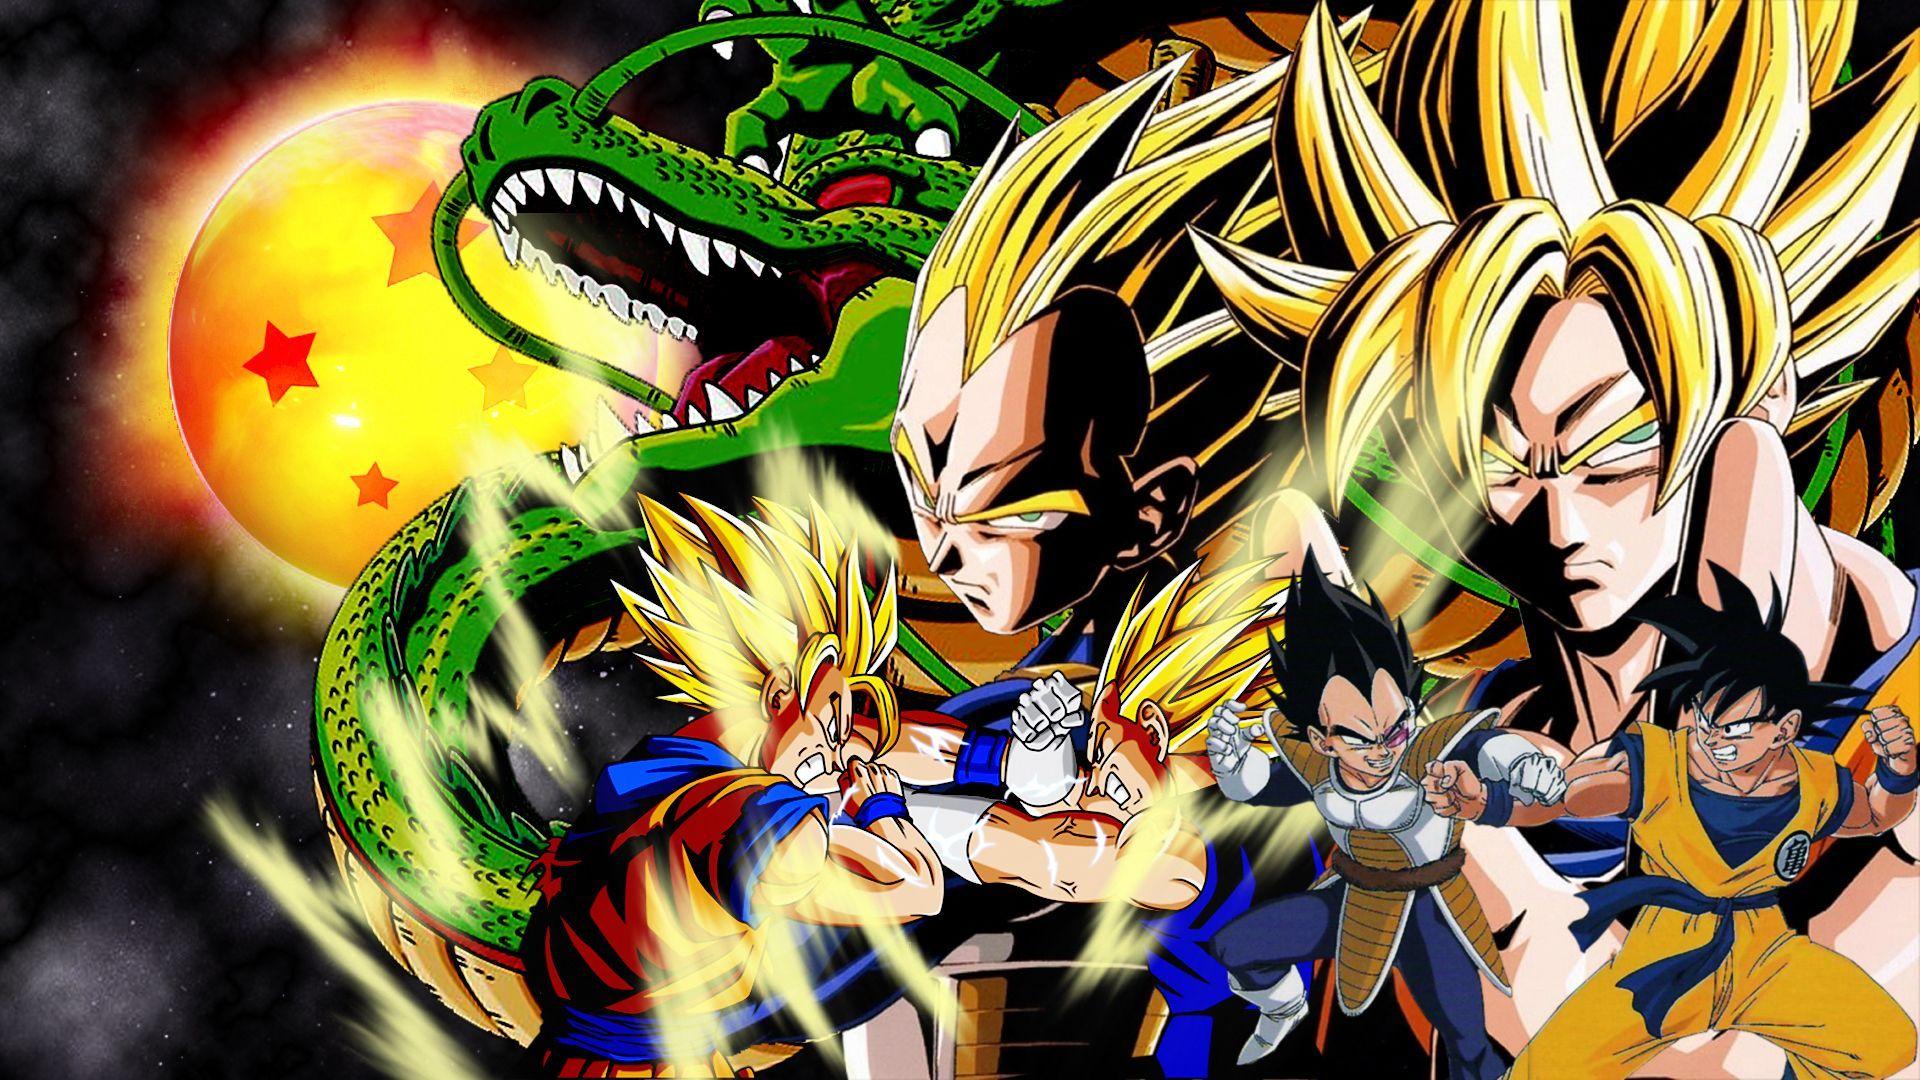 Goku vs vegeta by HD Wallpaper. I'm Just Saiyan. Goku